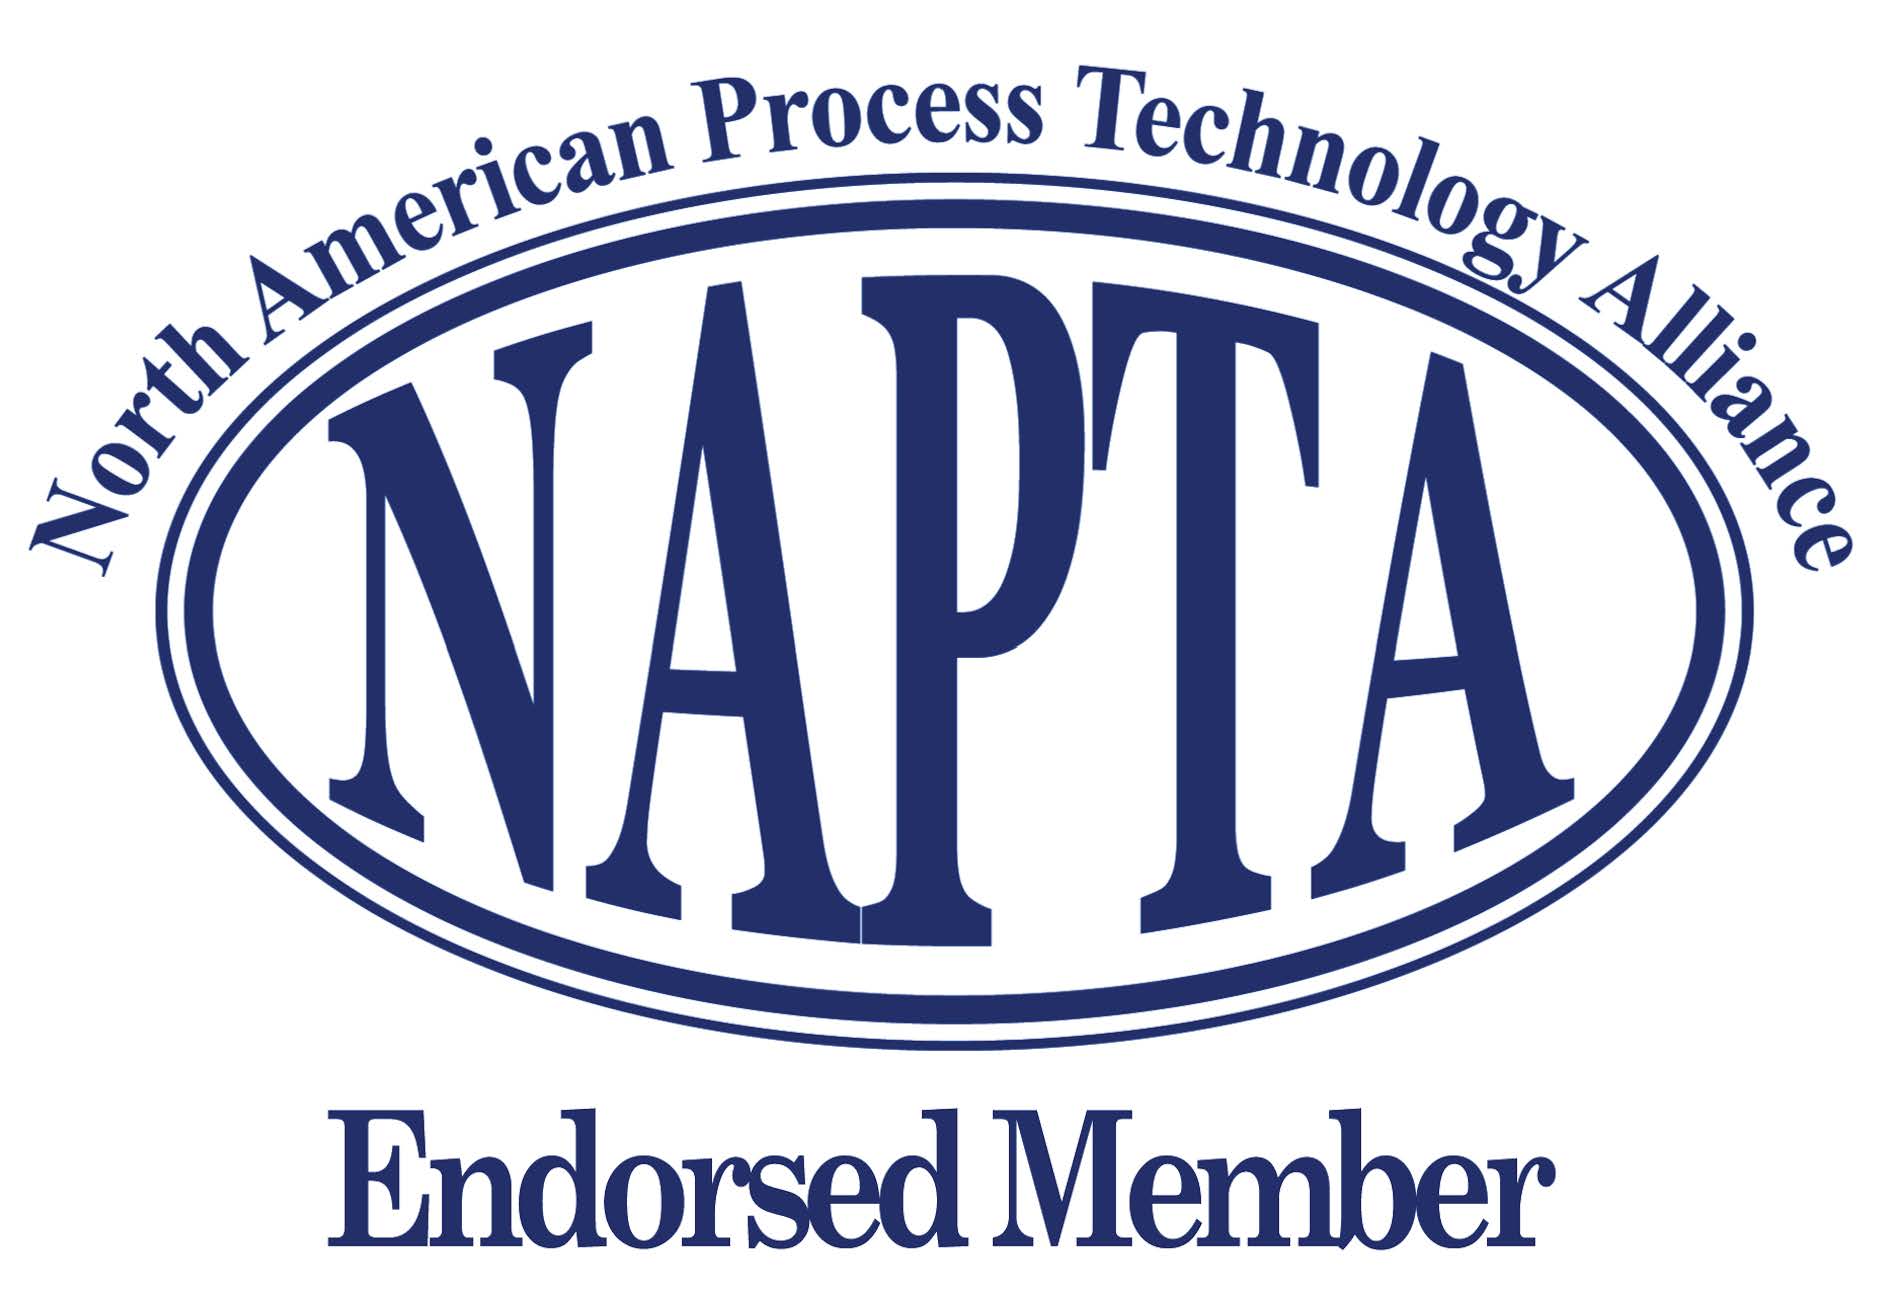 NAPTA logo endorsed member 